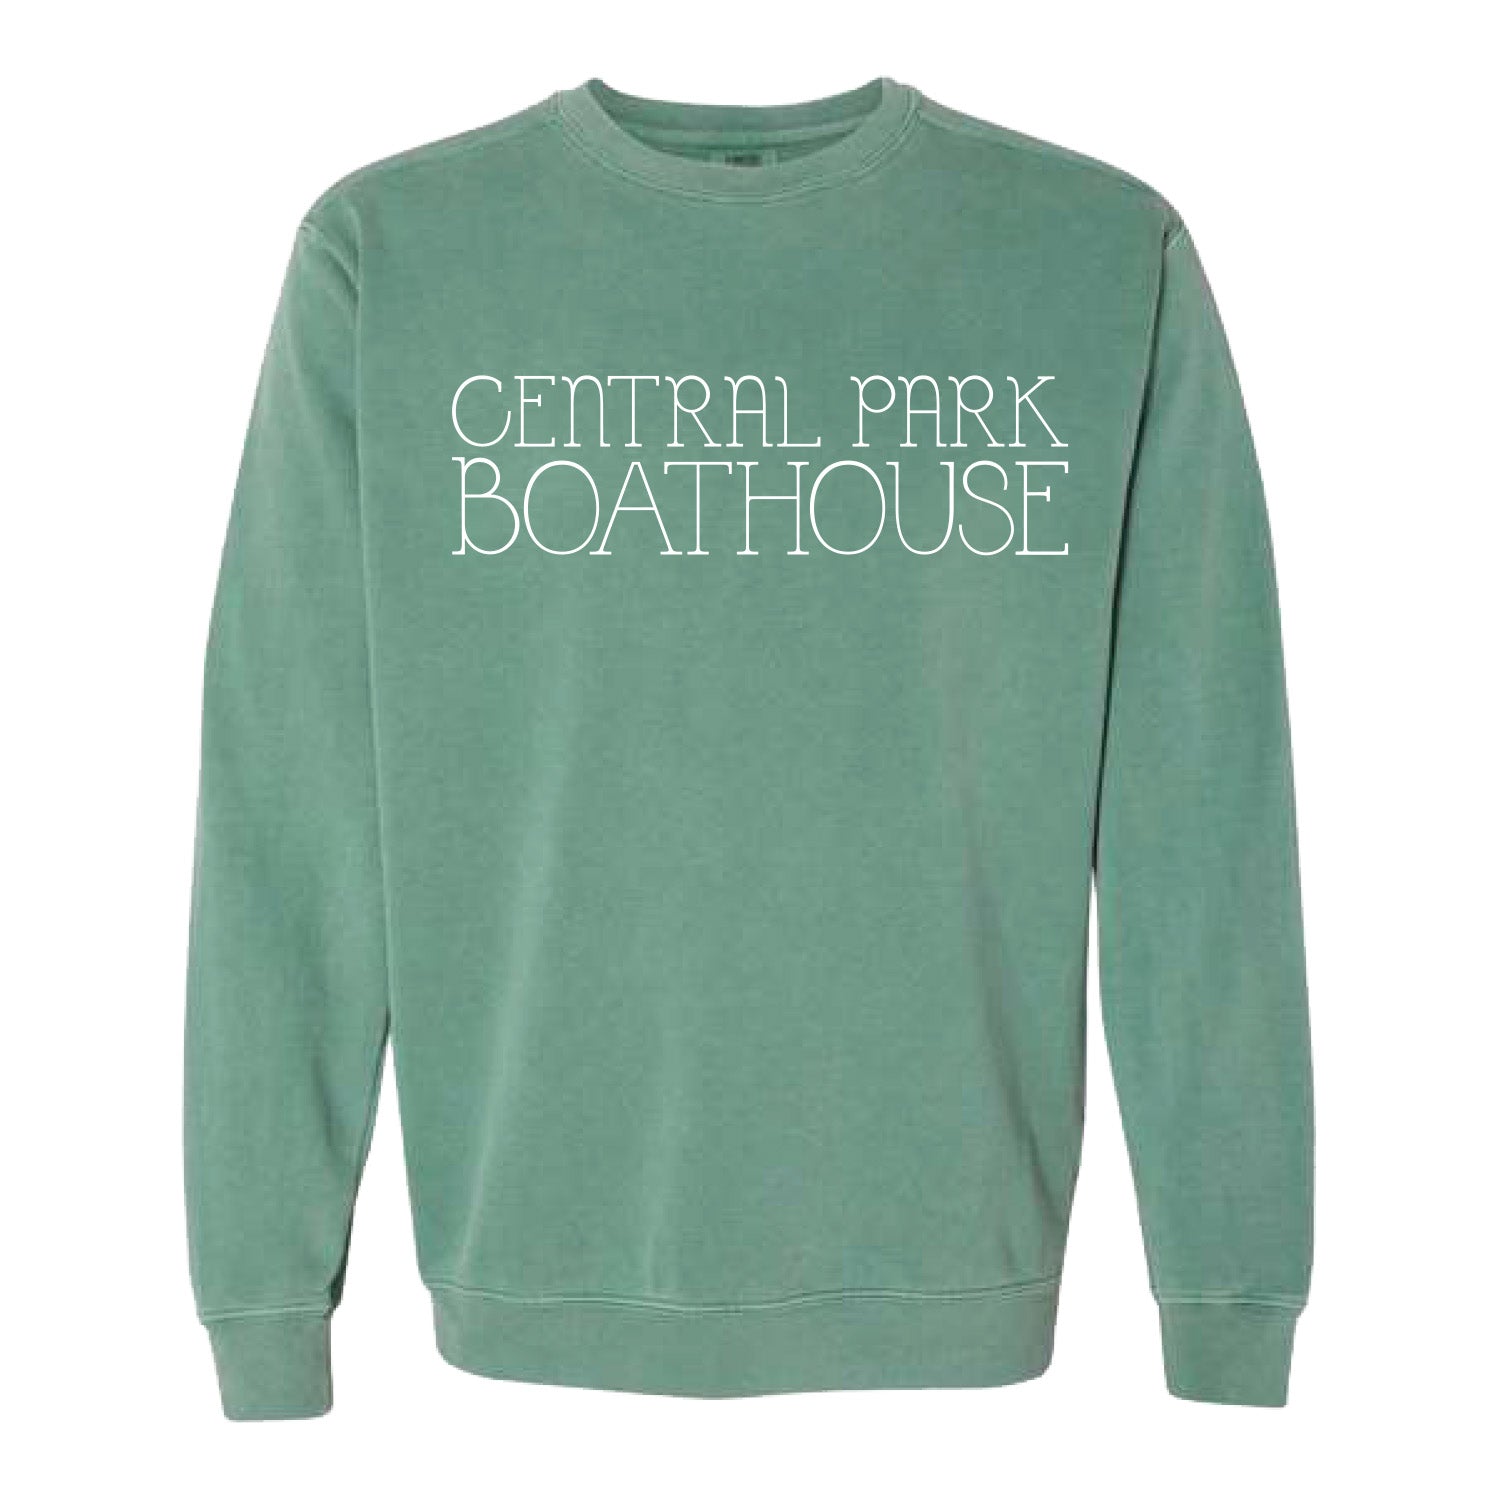 Comfort Colors Central Park Boathouse Green Crewneck - Front View